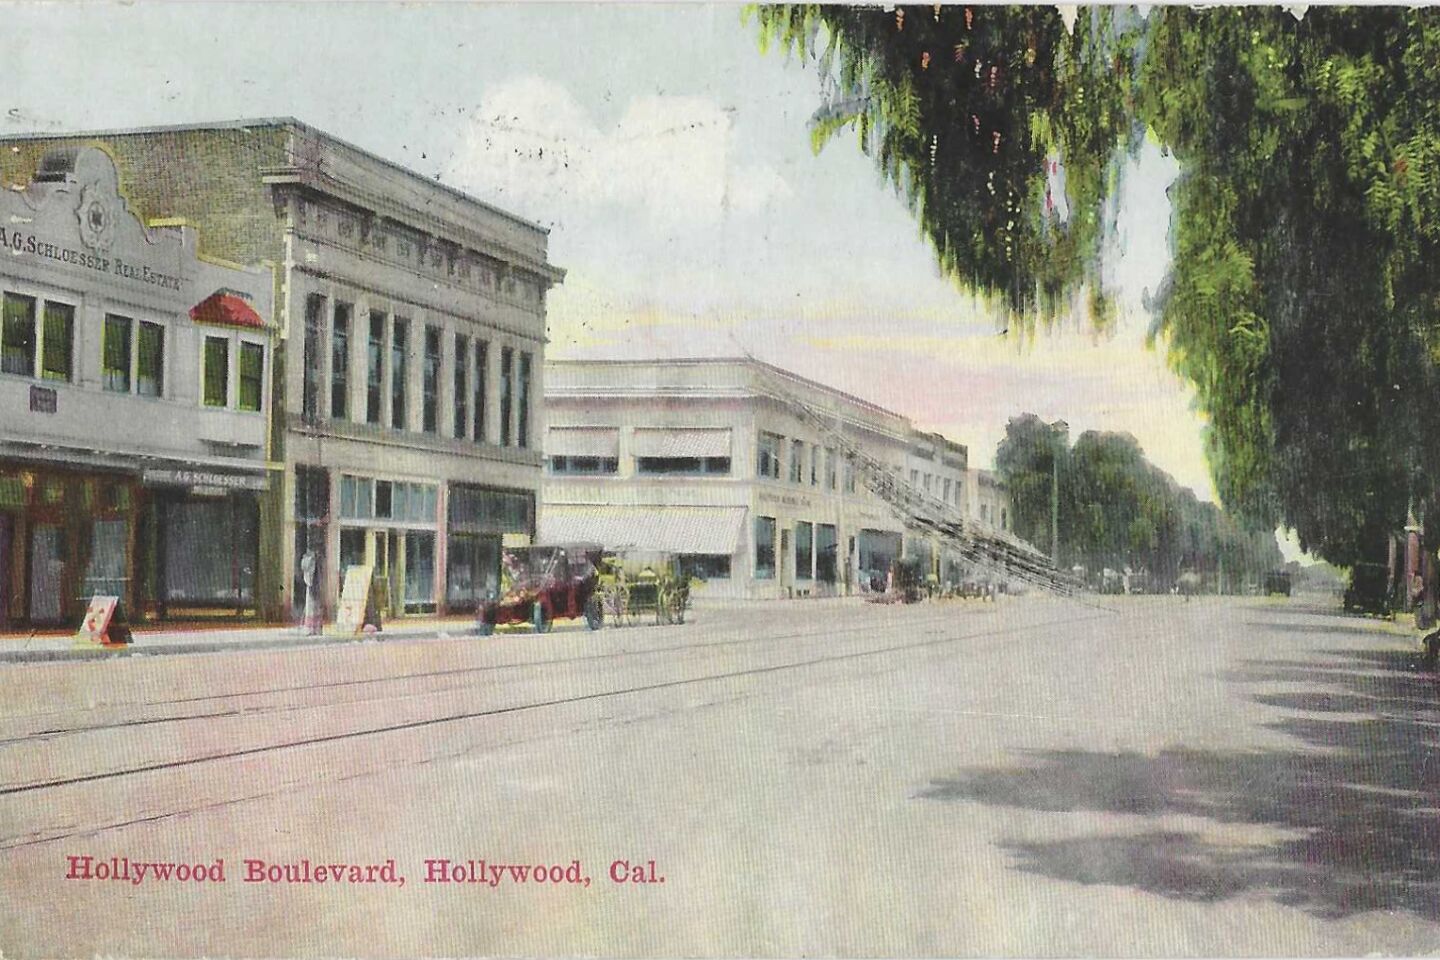 A vintage postcard shows a nearly empty Hollywood Boulevard